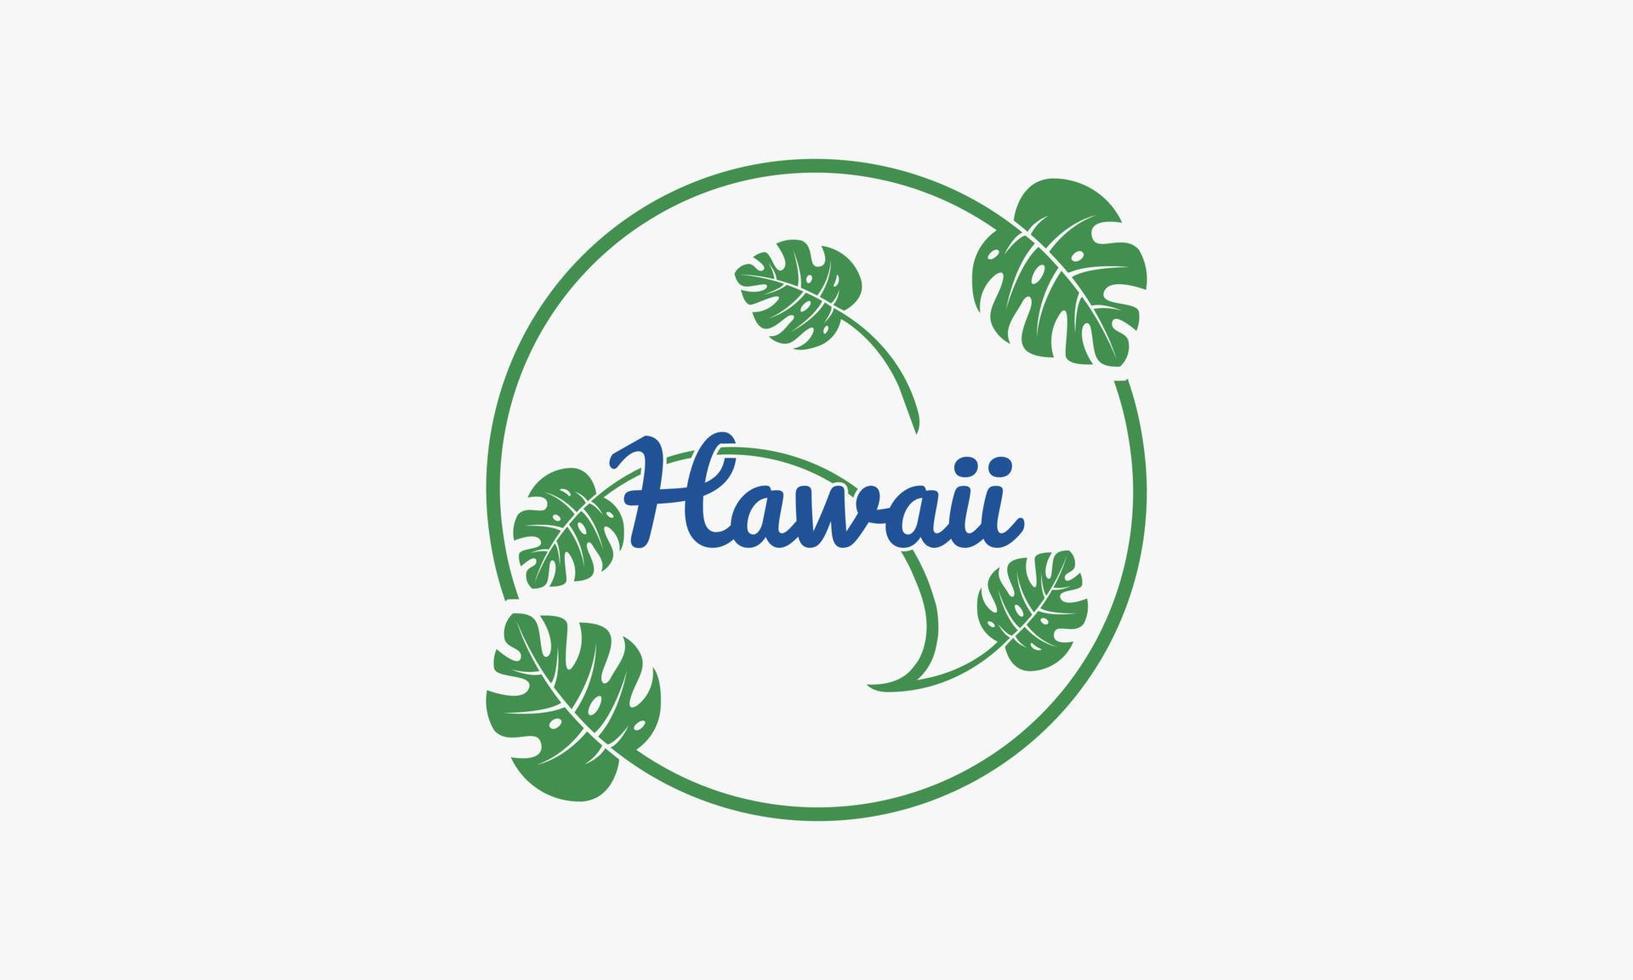 texto de Havaí com monstera deixa o vetor do projeto isolado no fundo branco.